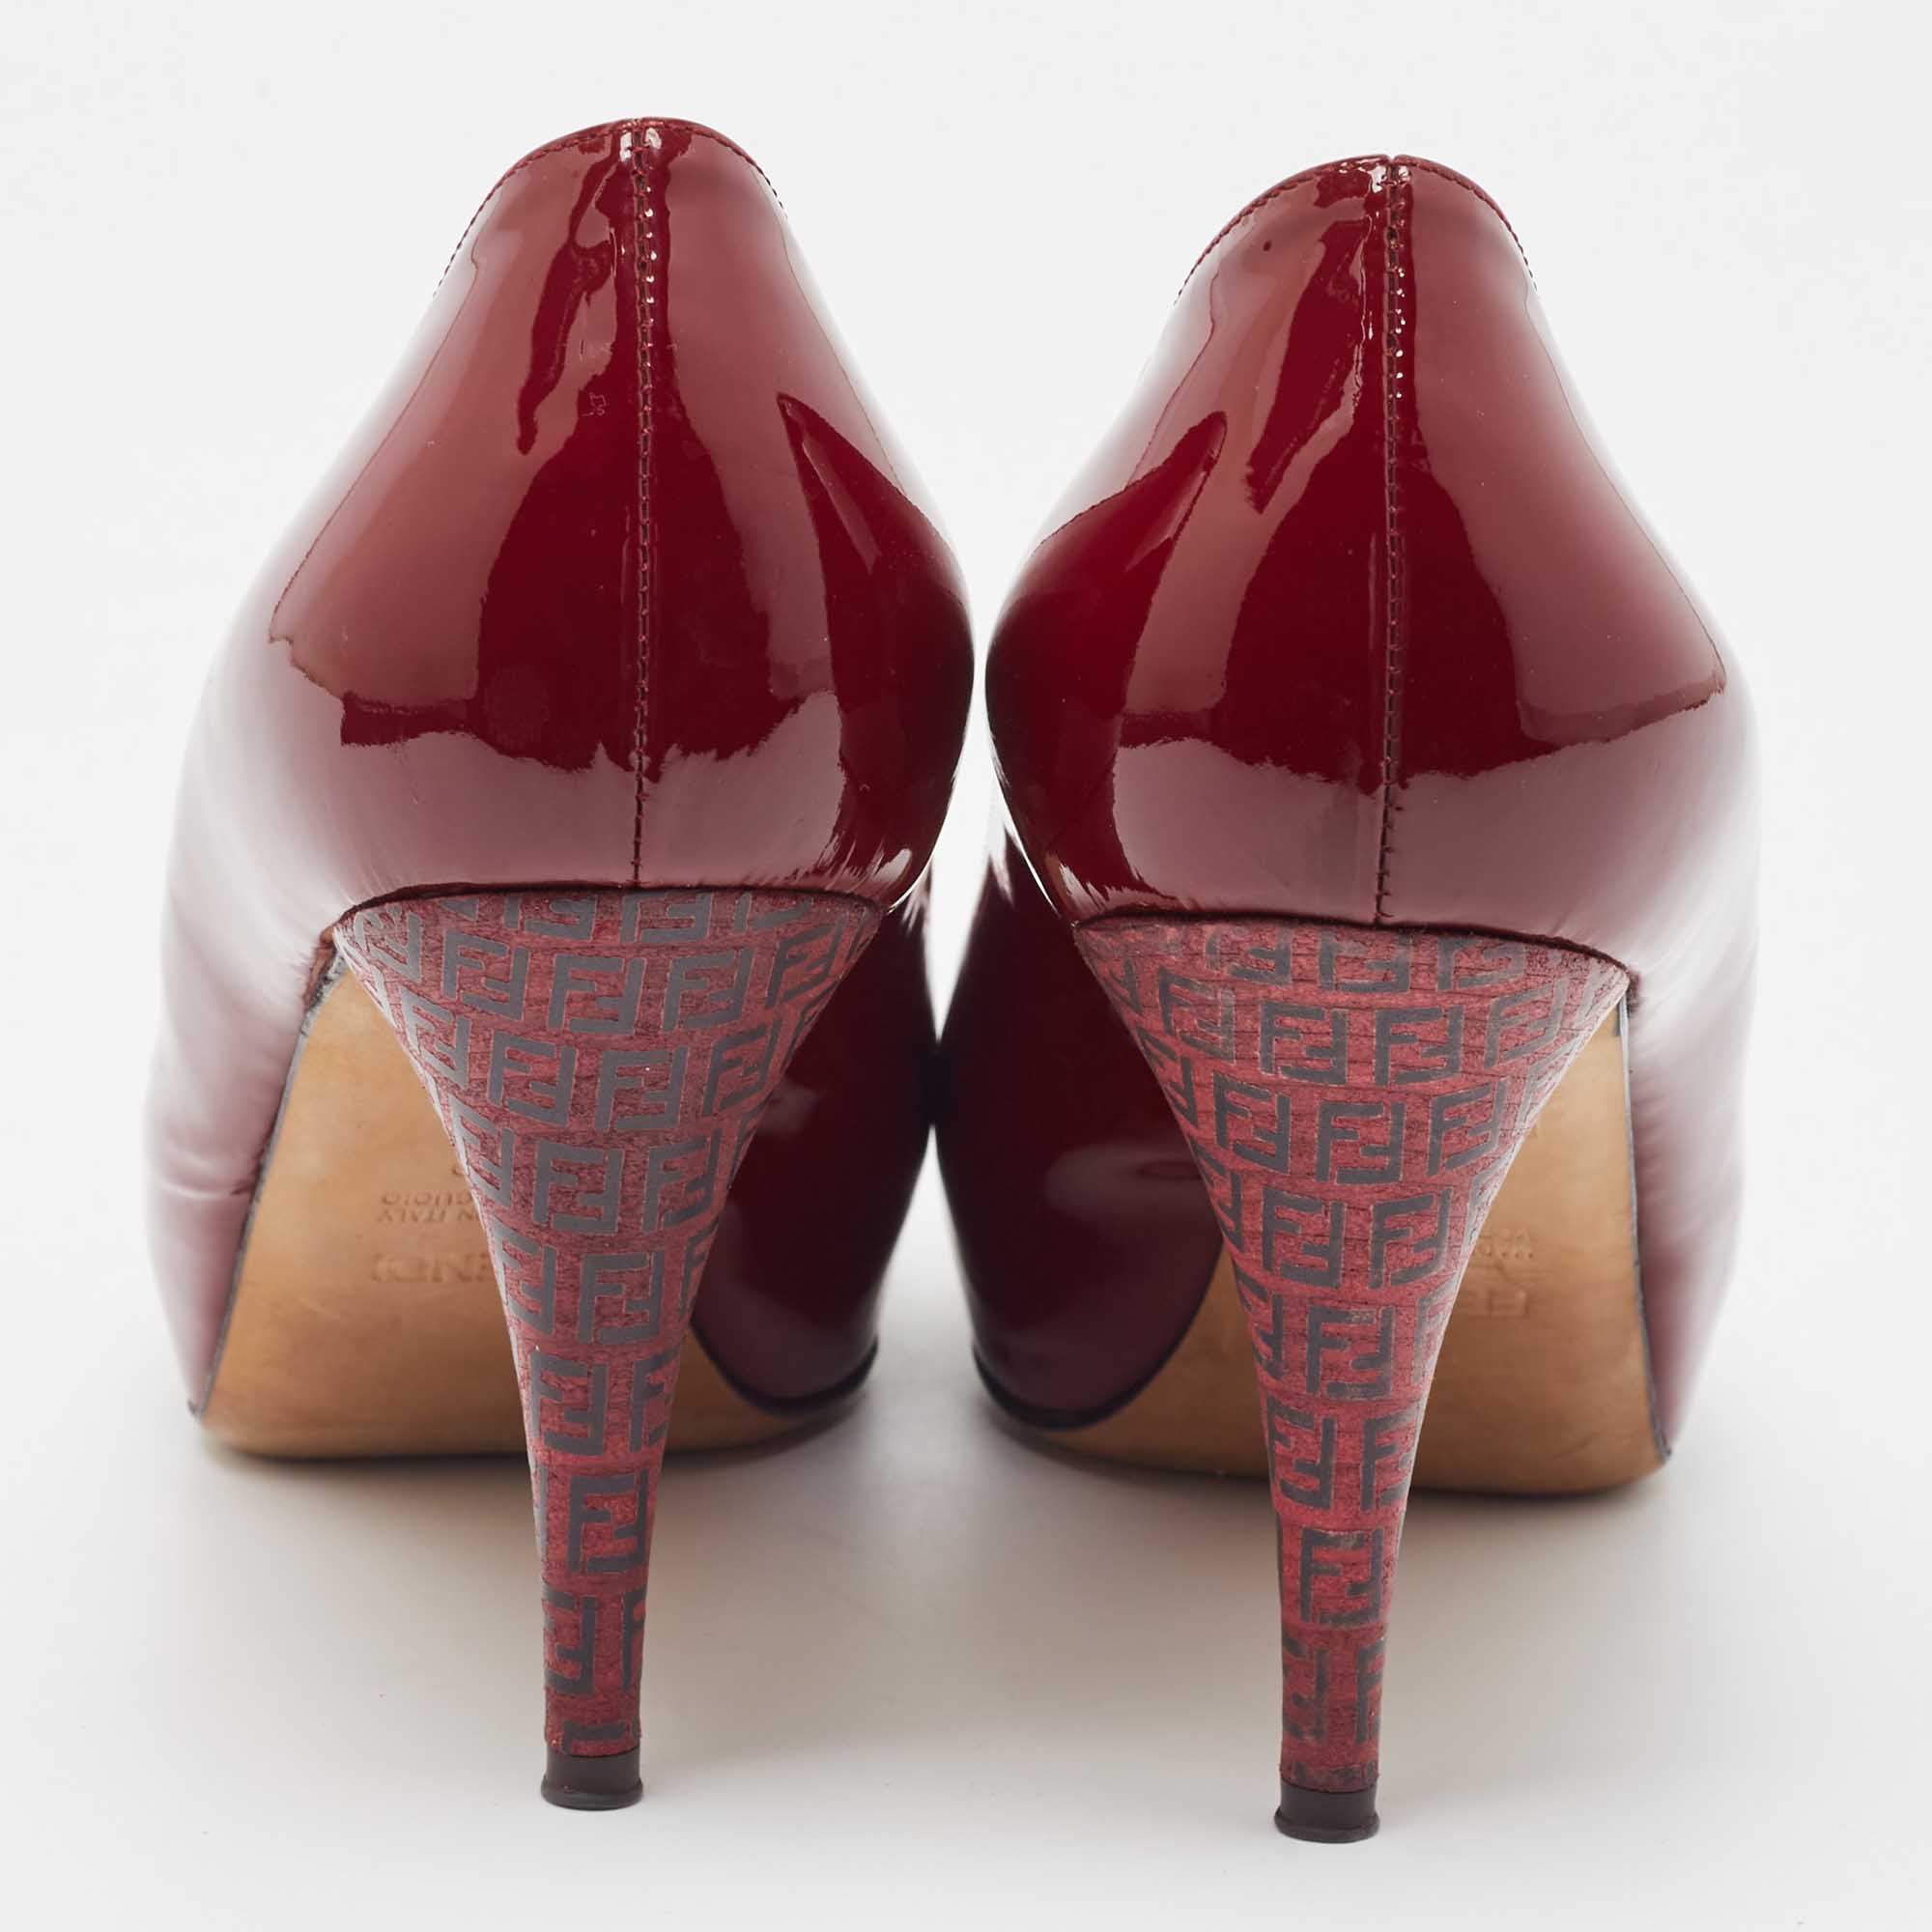 Fendi Burgundy Patent Leather FF Heel Round Toe Pumps Size 39